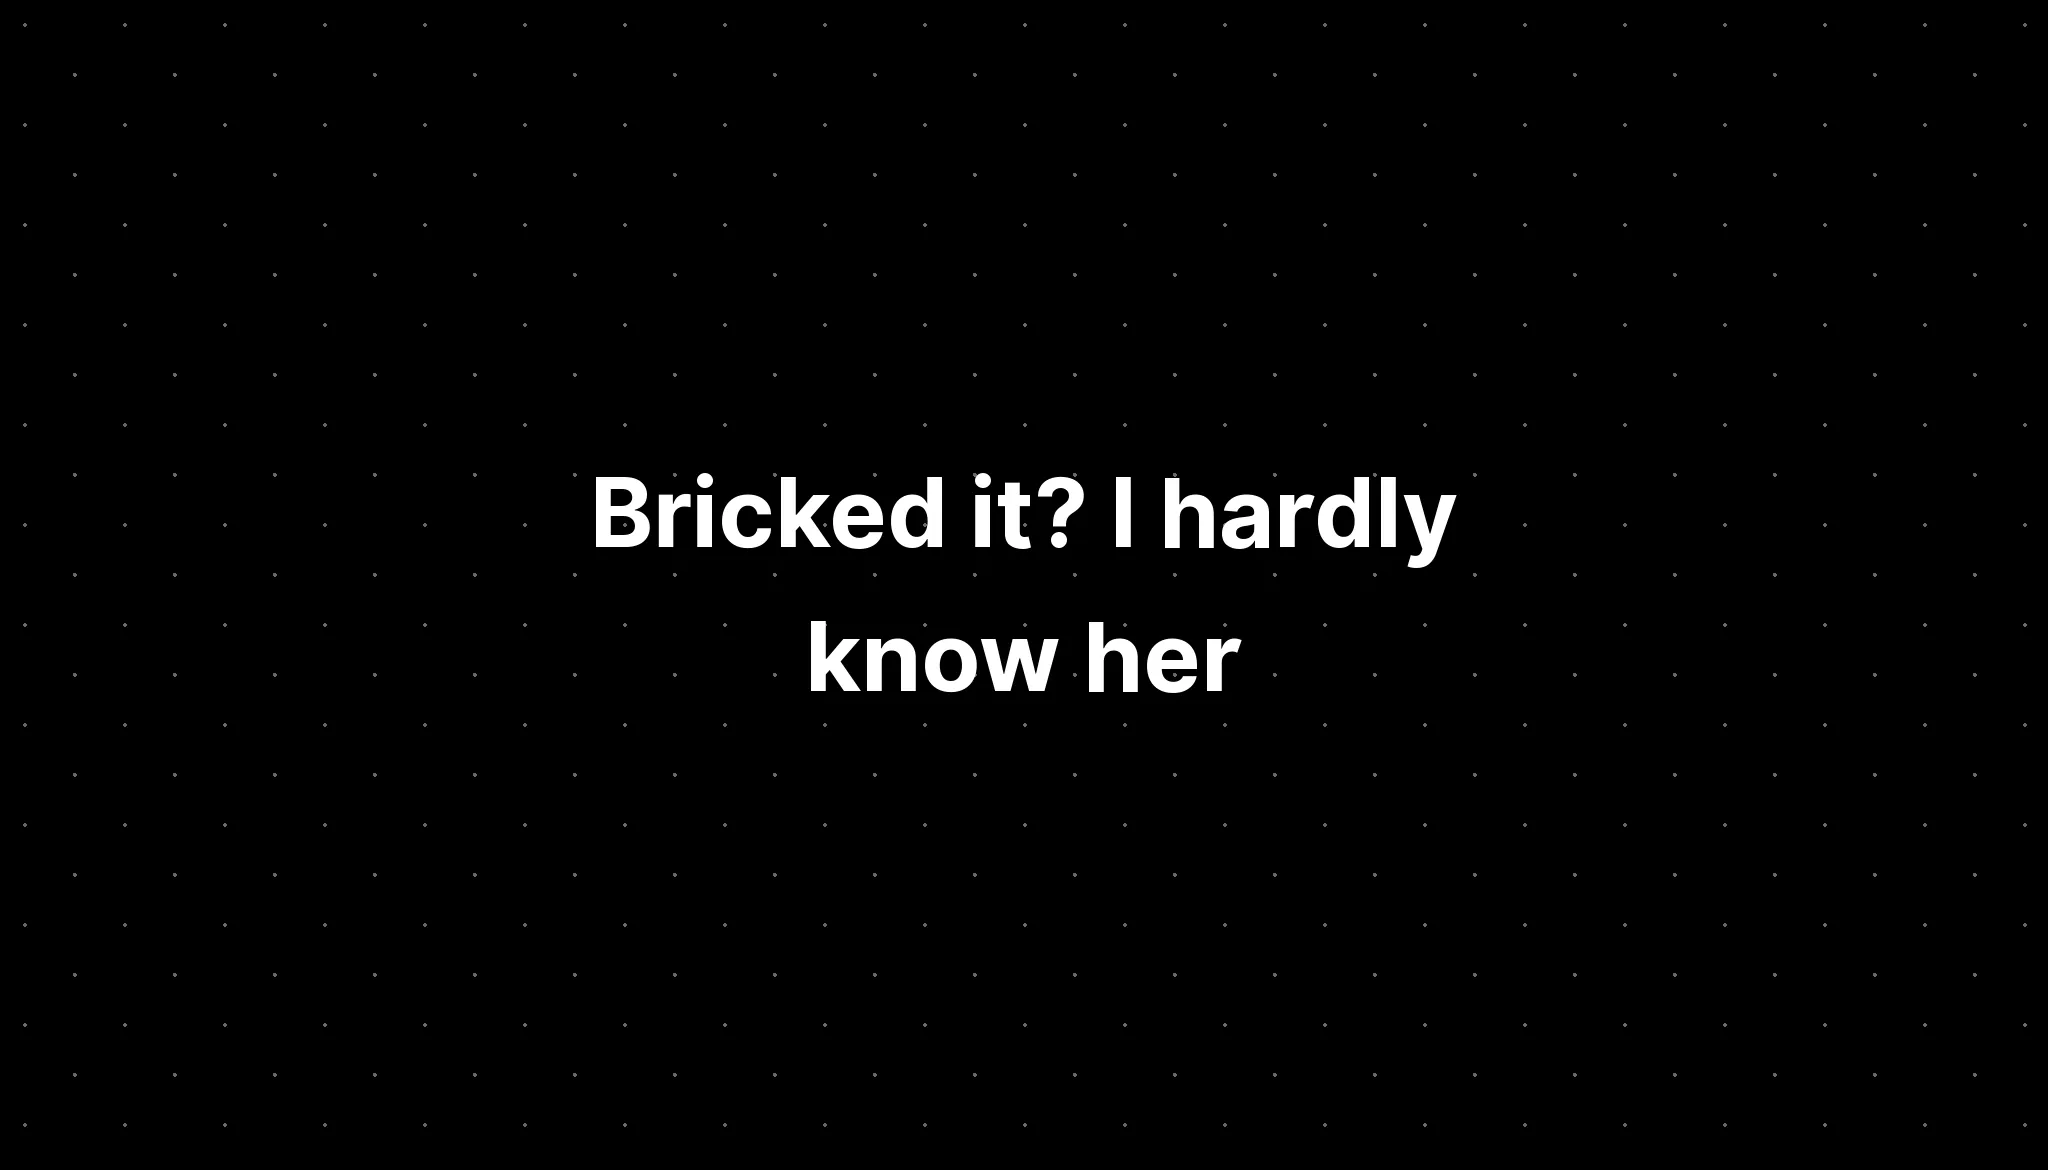 Bricked it? I hardly know her